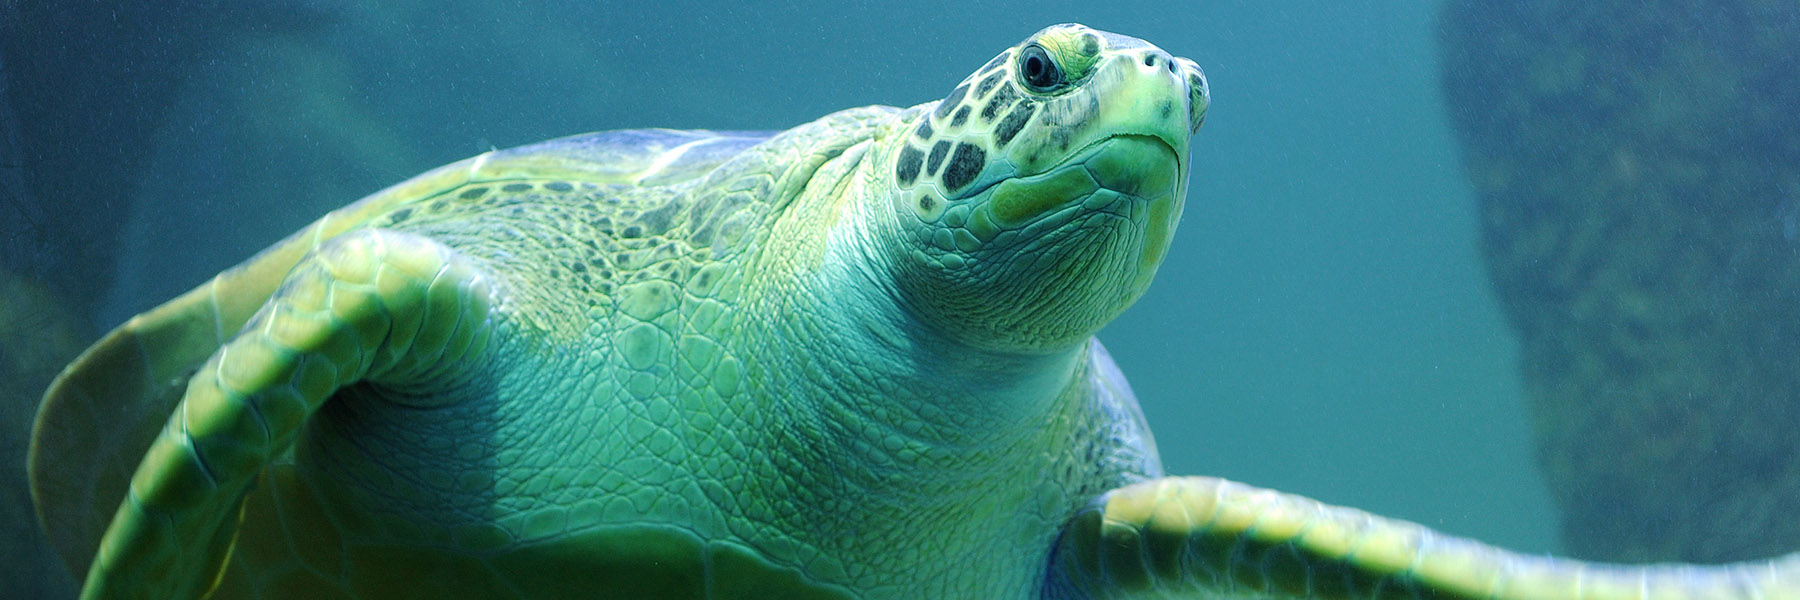 SEA LIFE Aquarium Sea Turtles